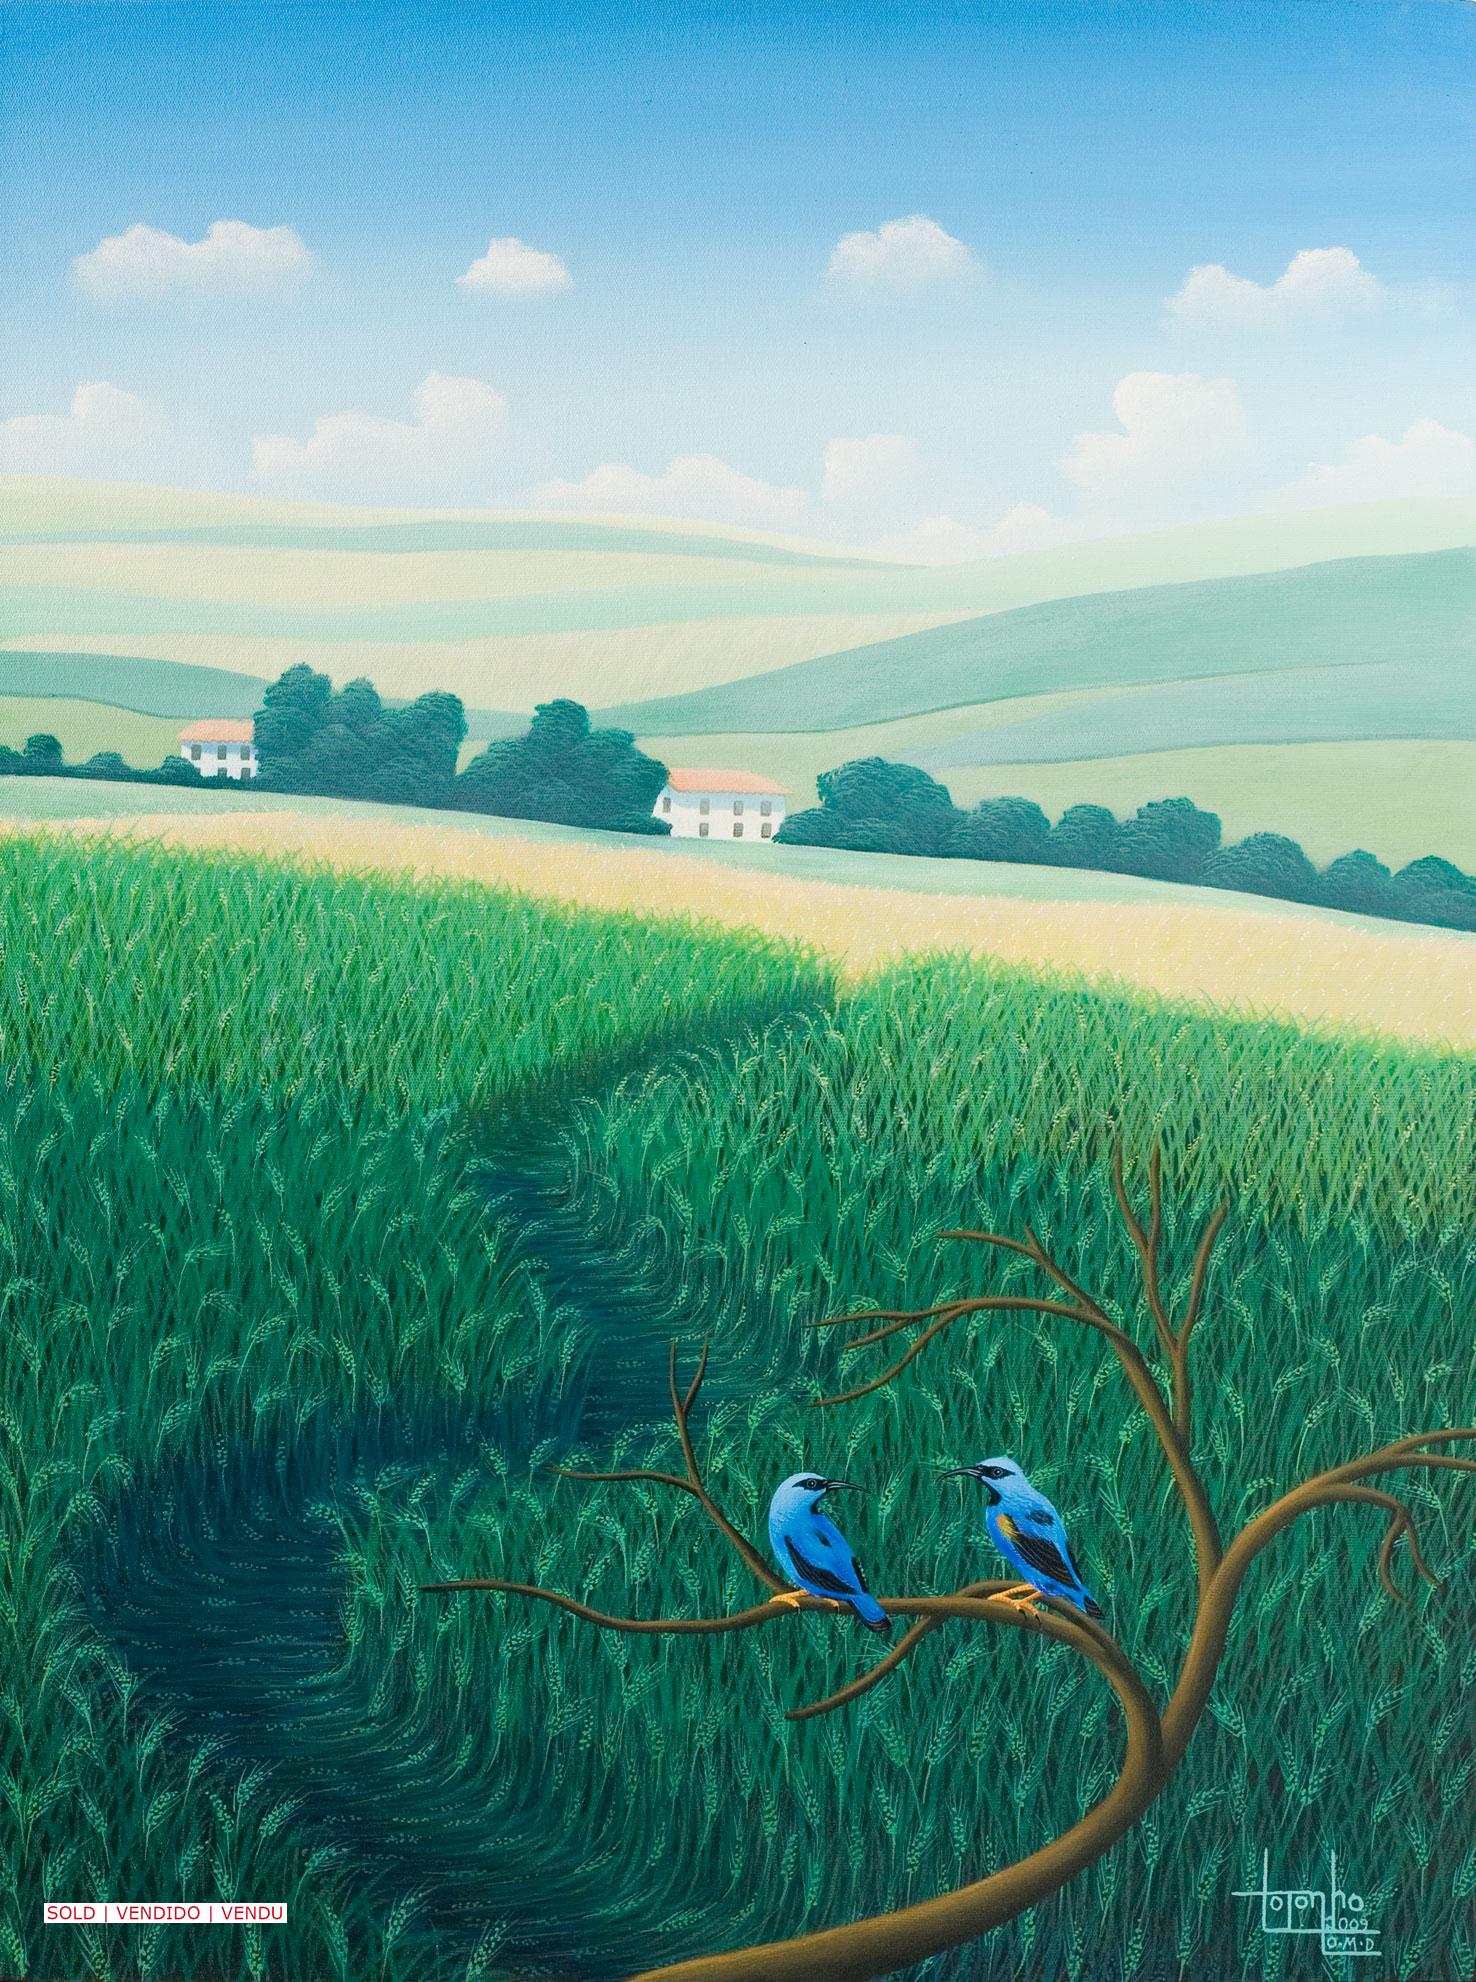 Brazilian landscape, blue birds, landscape, mountains, fields, painting by Totonmho